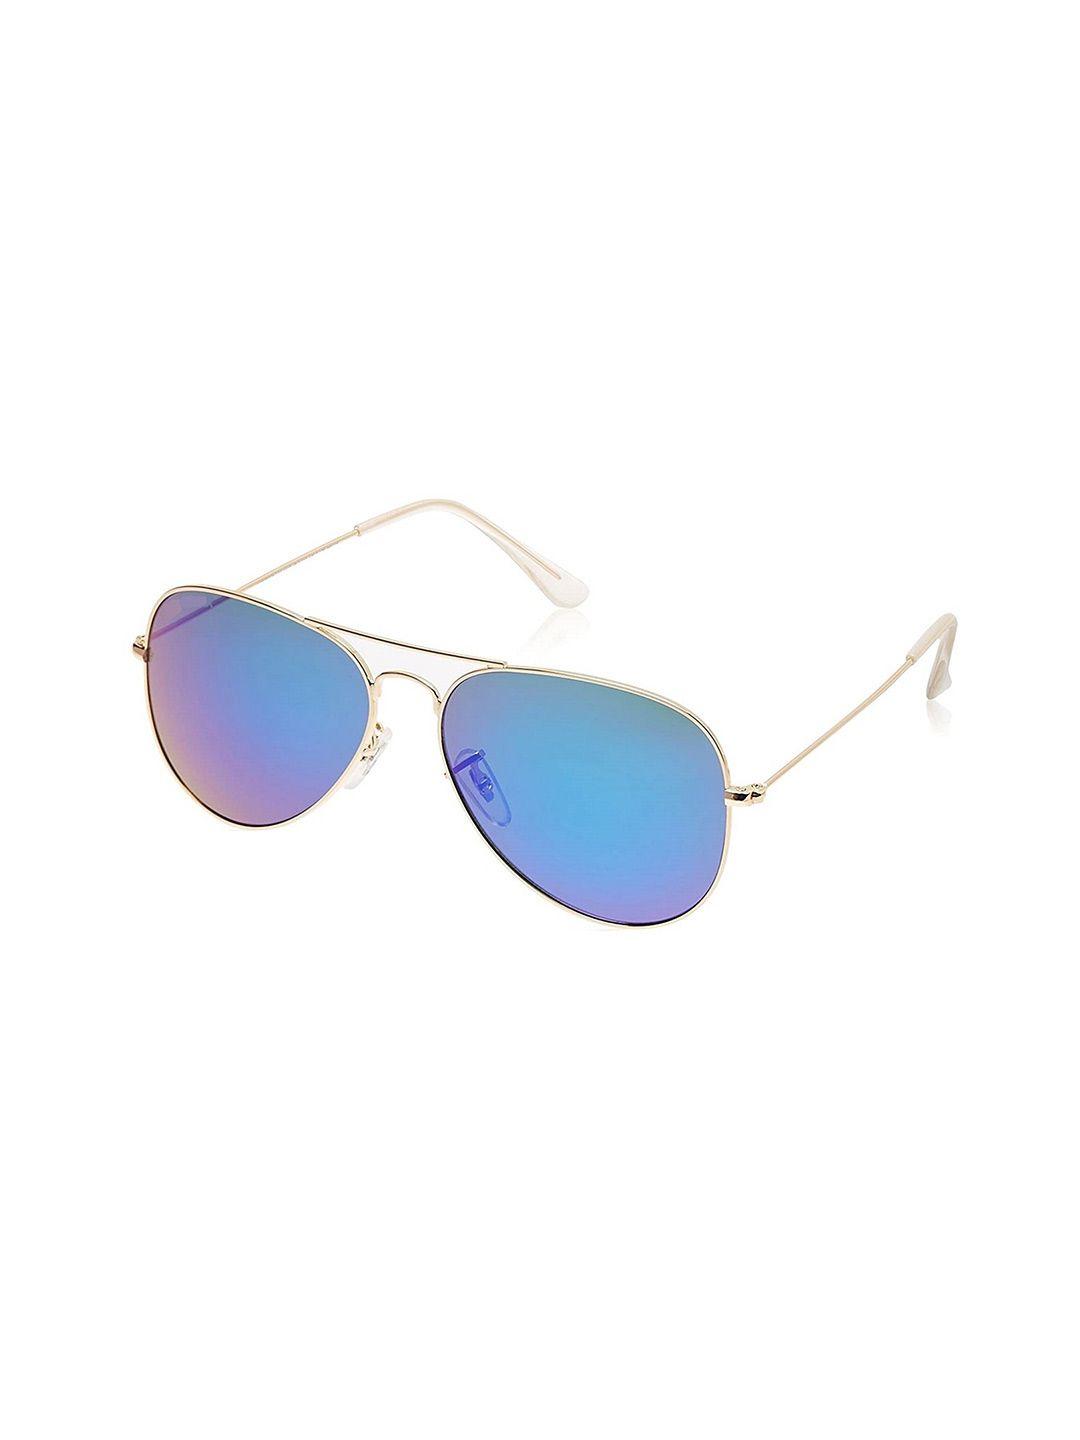 sunnies unisex aviator sunglasses with uv protected lens sns-jb-3025p-c12